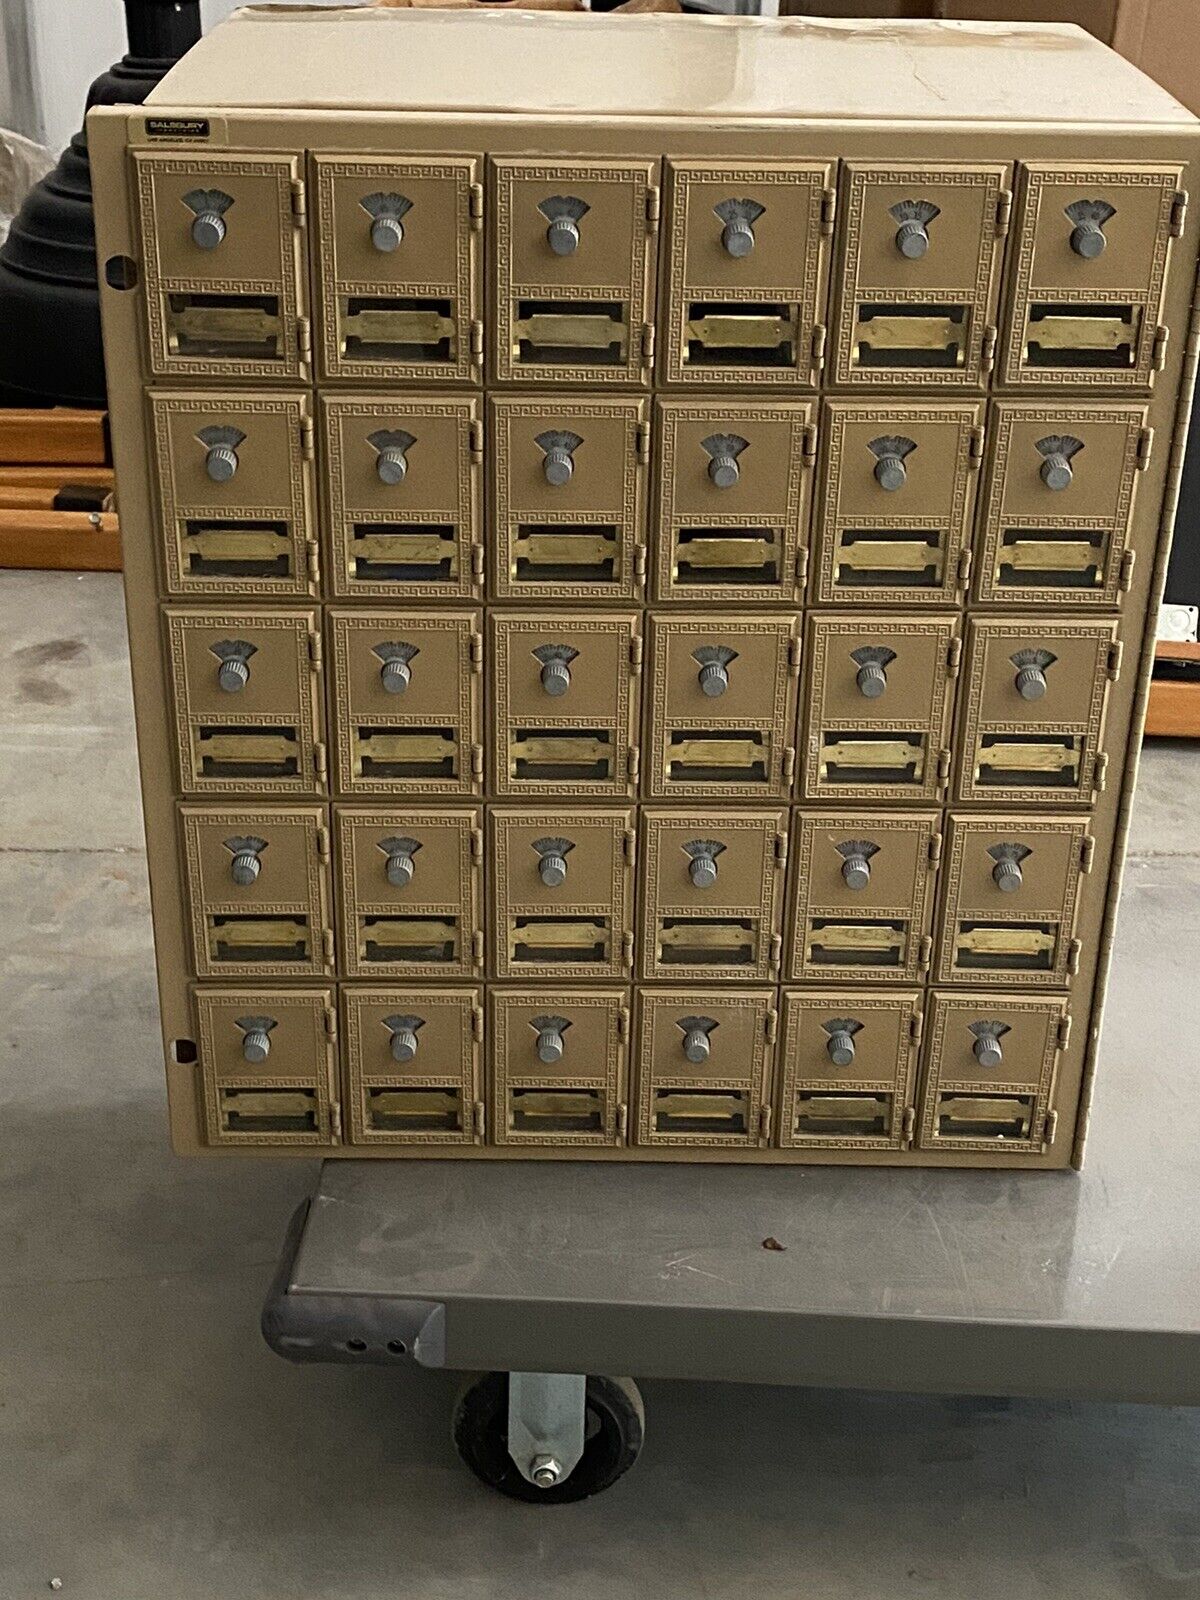 Post Office Box Door Case Lot of 30 Doors 22”x 26” Liberty University, Can Ship